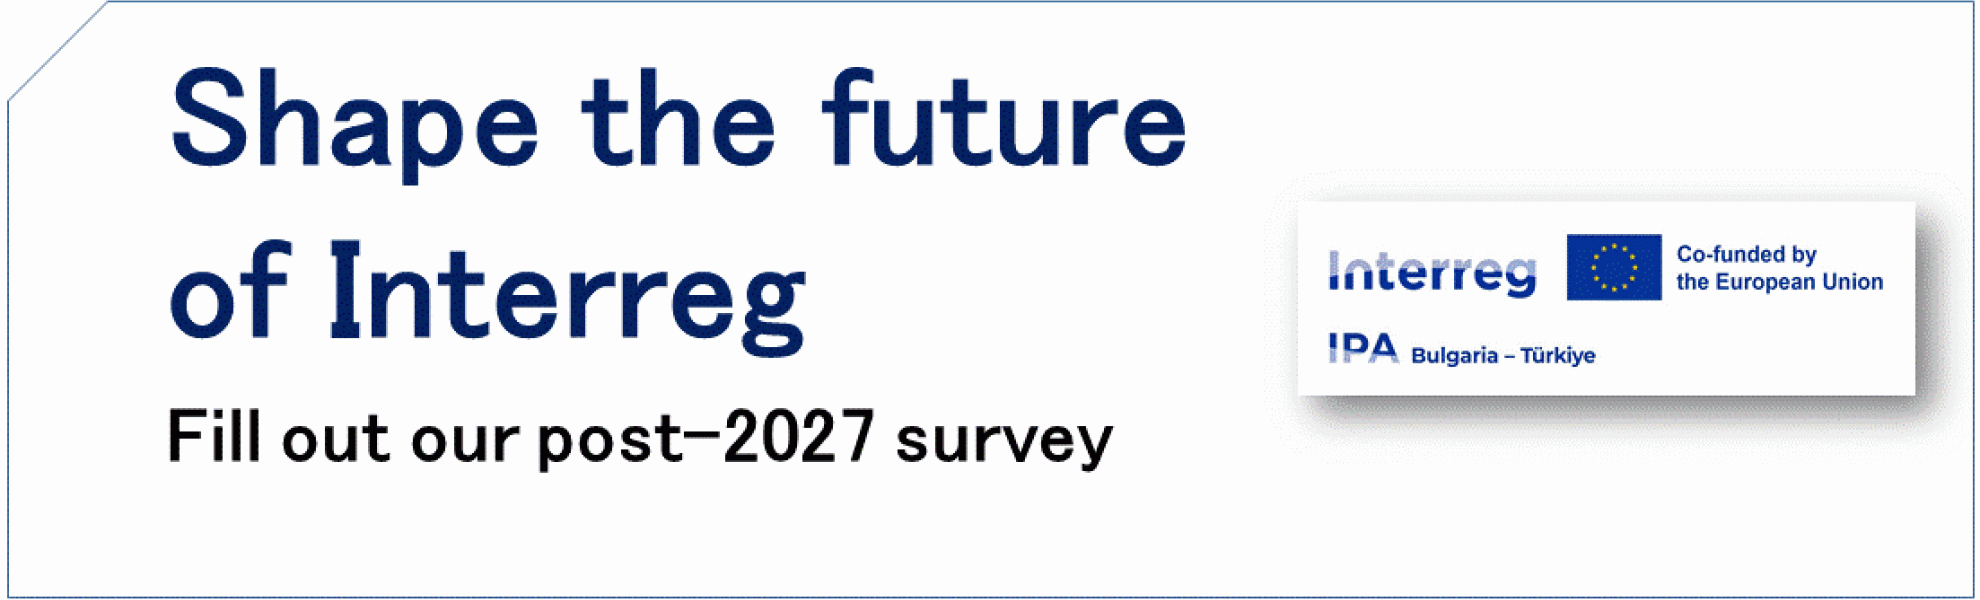 Post 2027 Survey